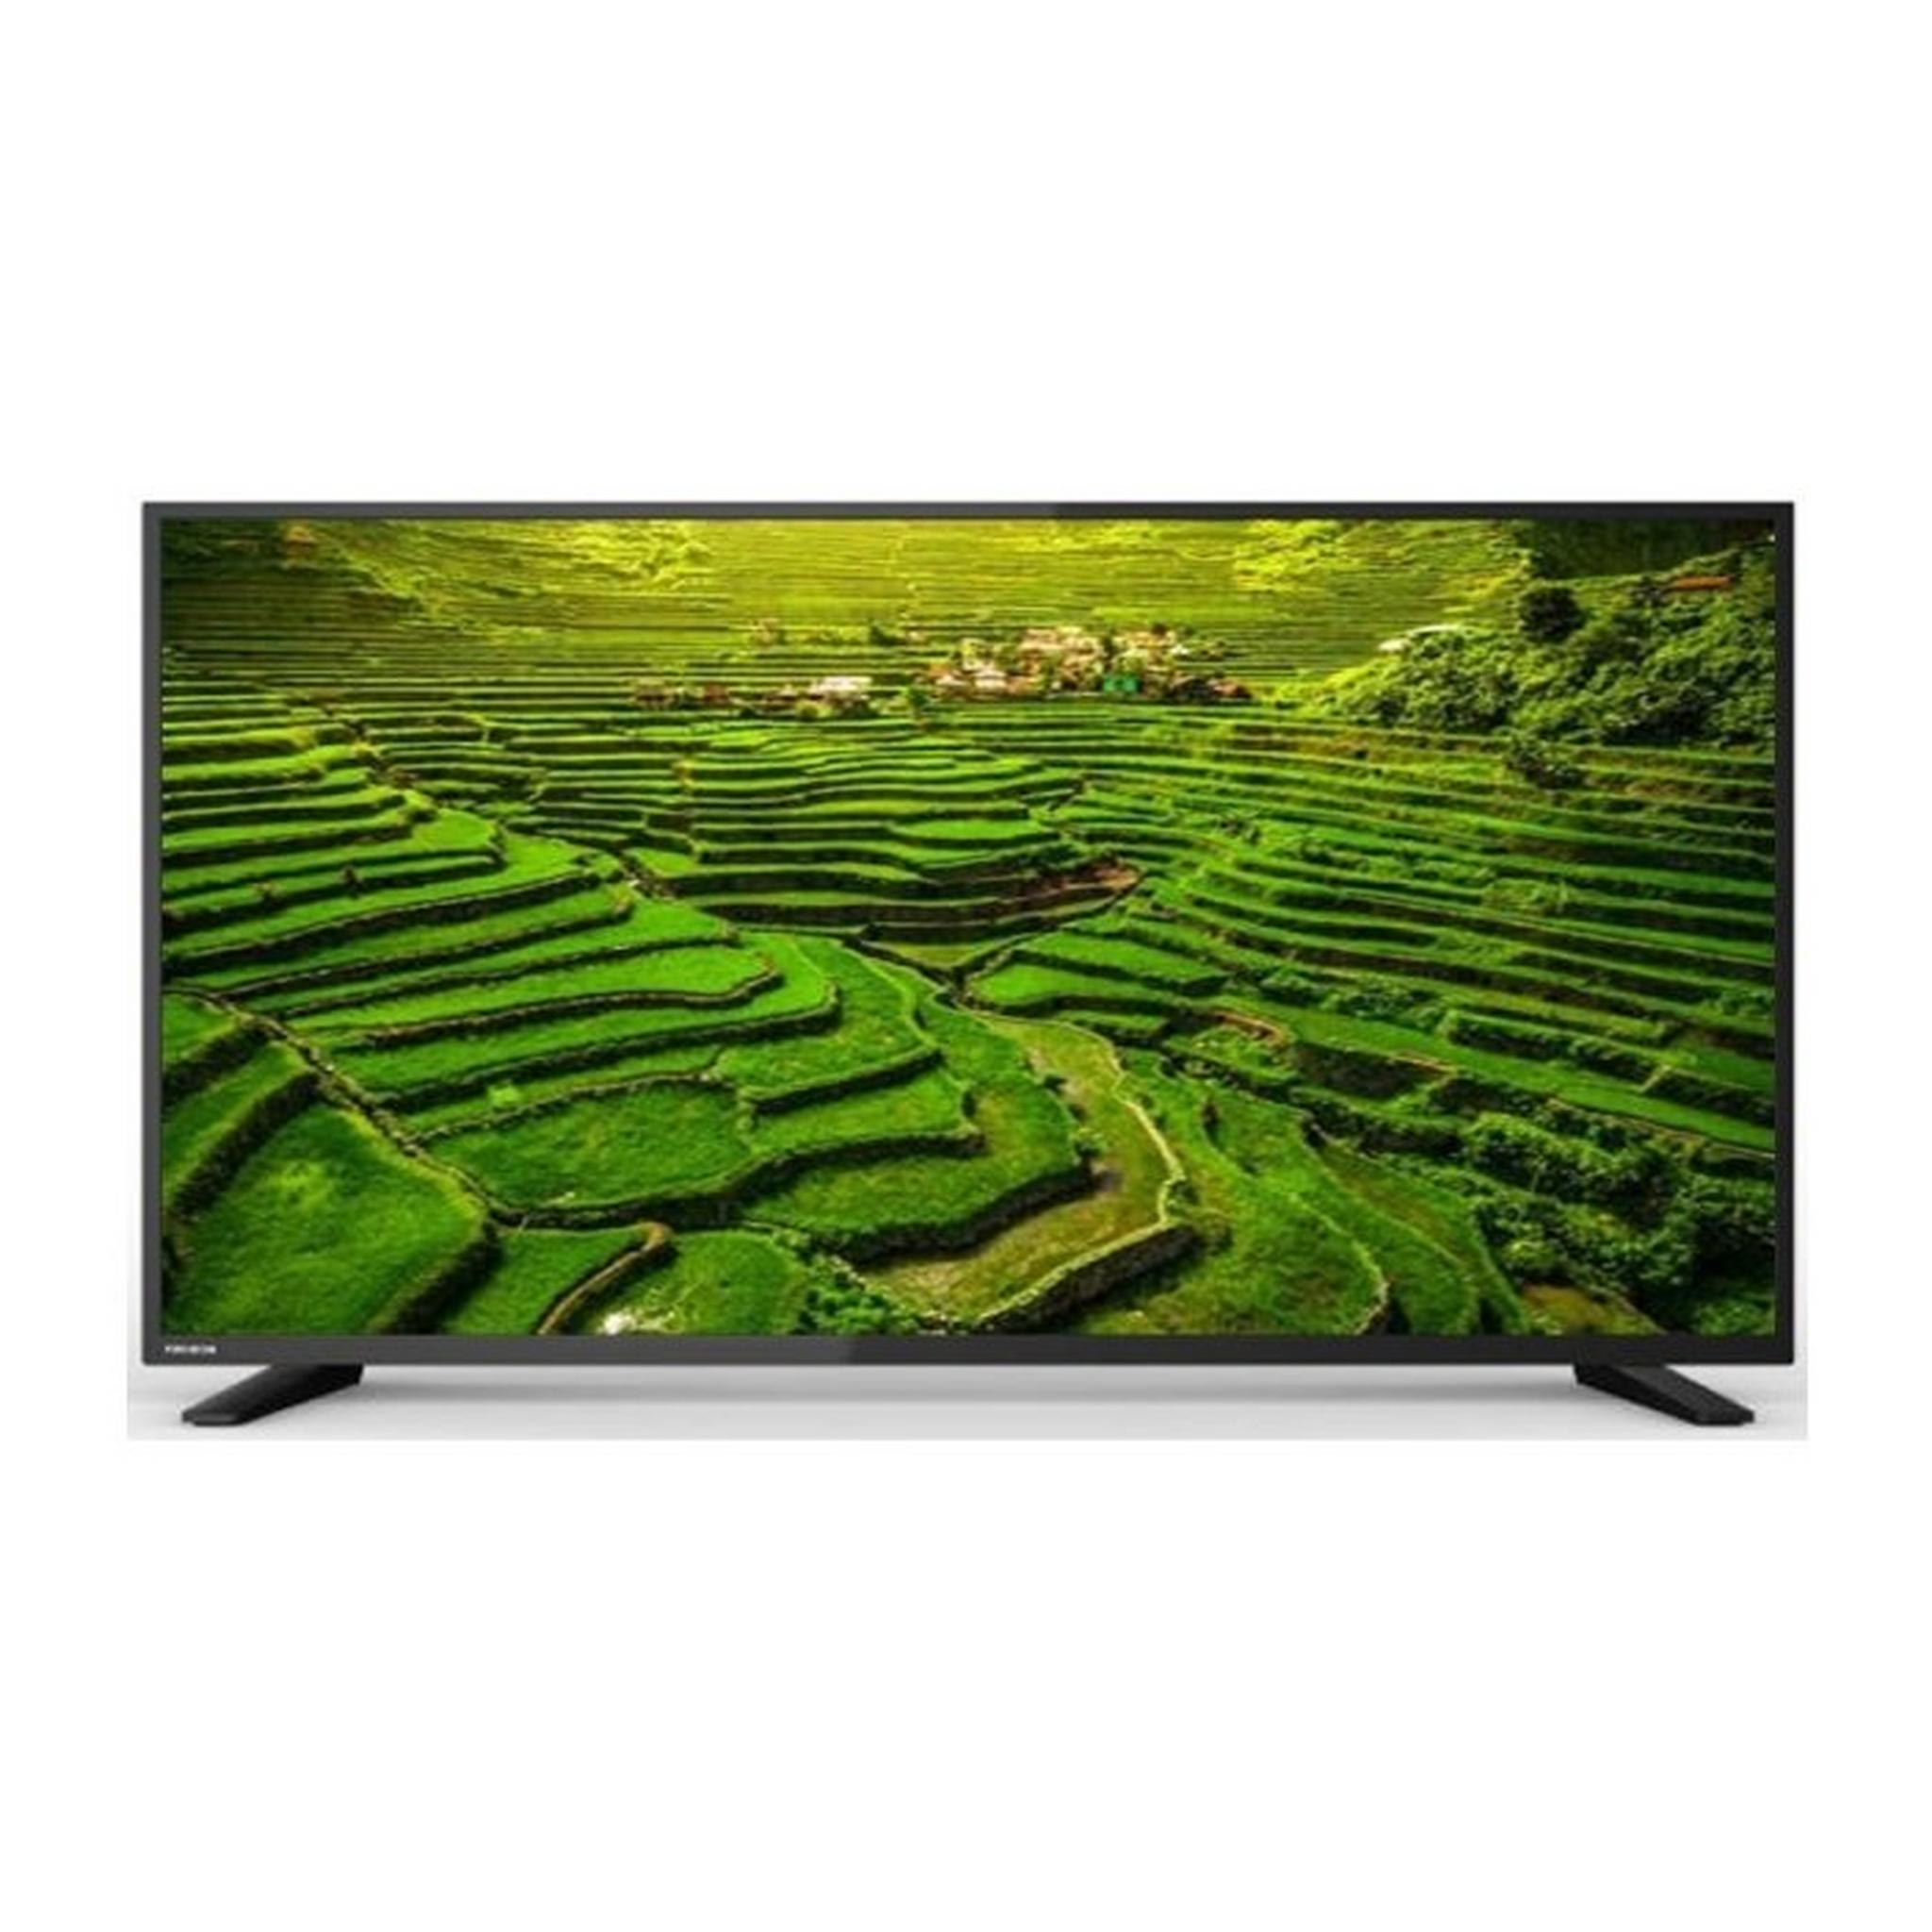 Toshiba TV 32 inch HD LED - 32S2800EE